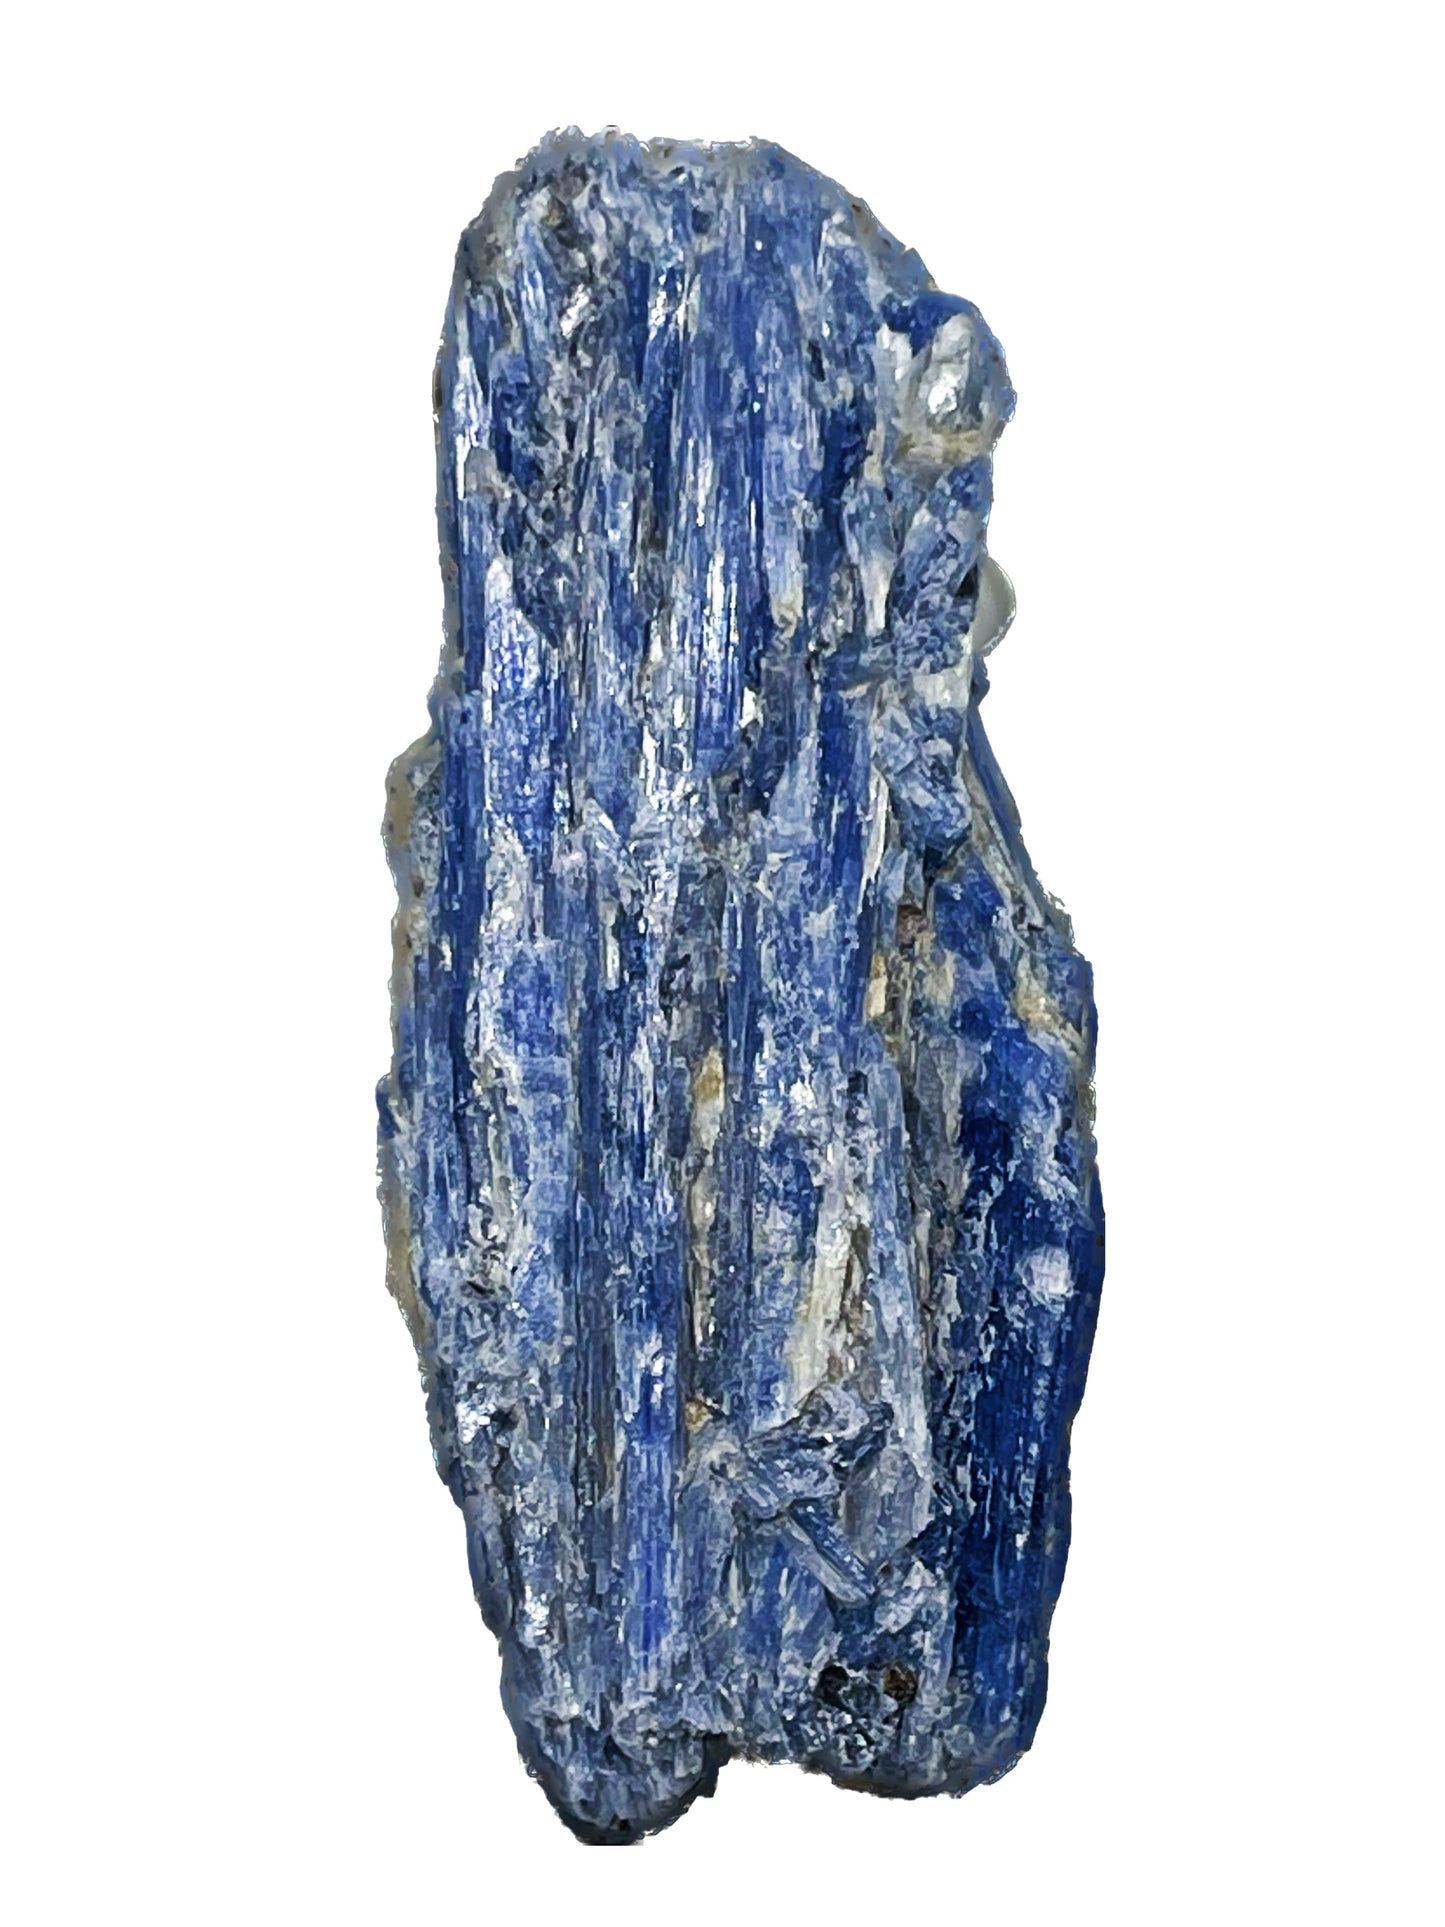 Blue Kyanite Specimens